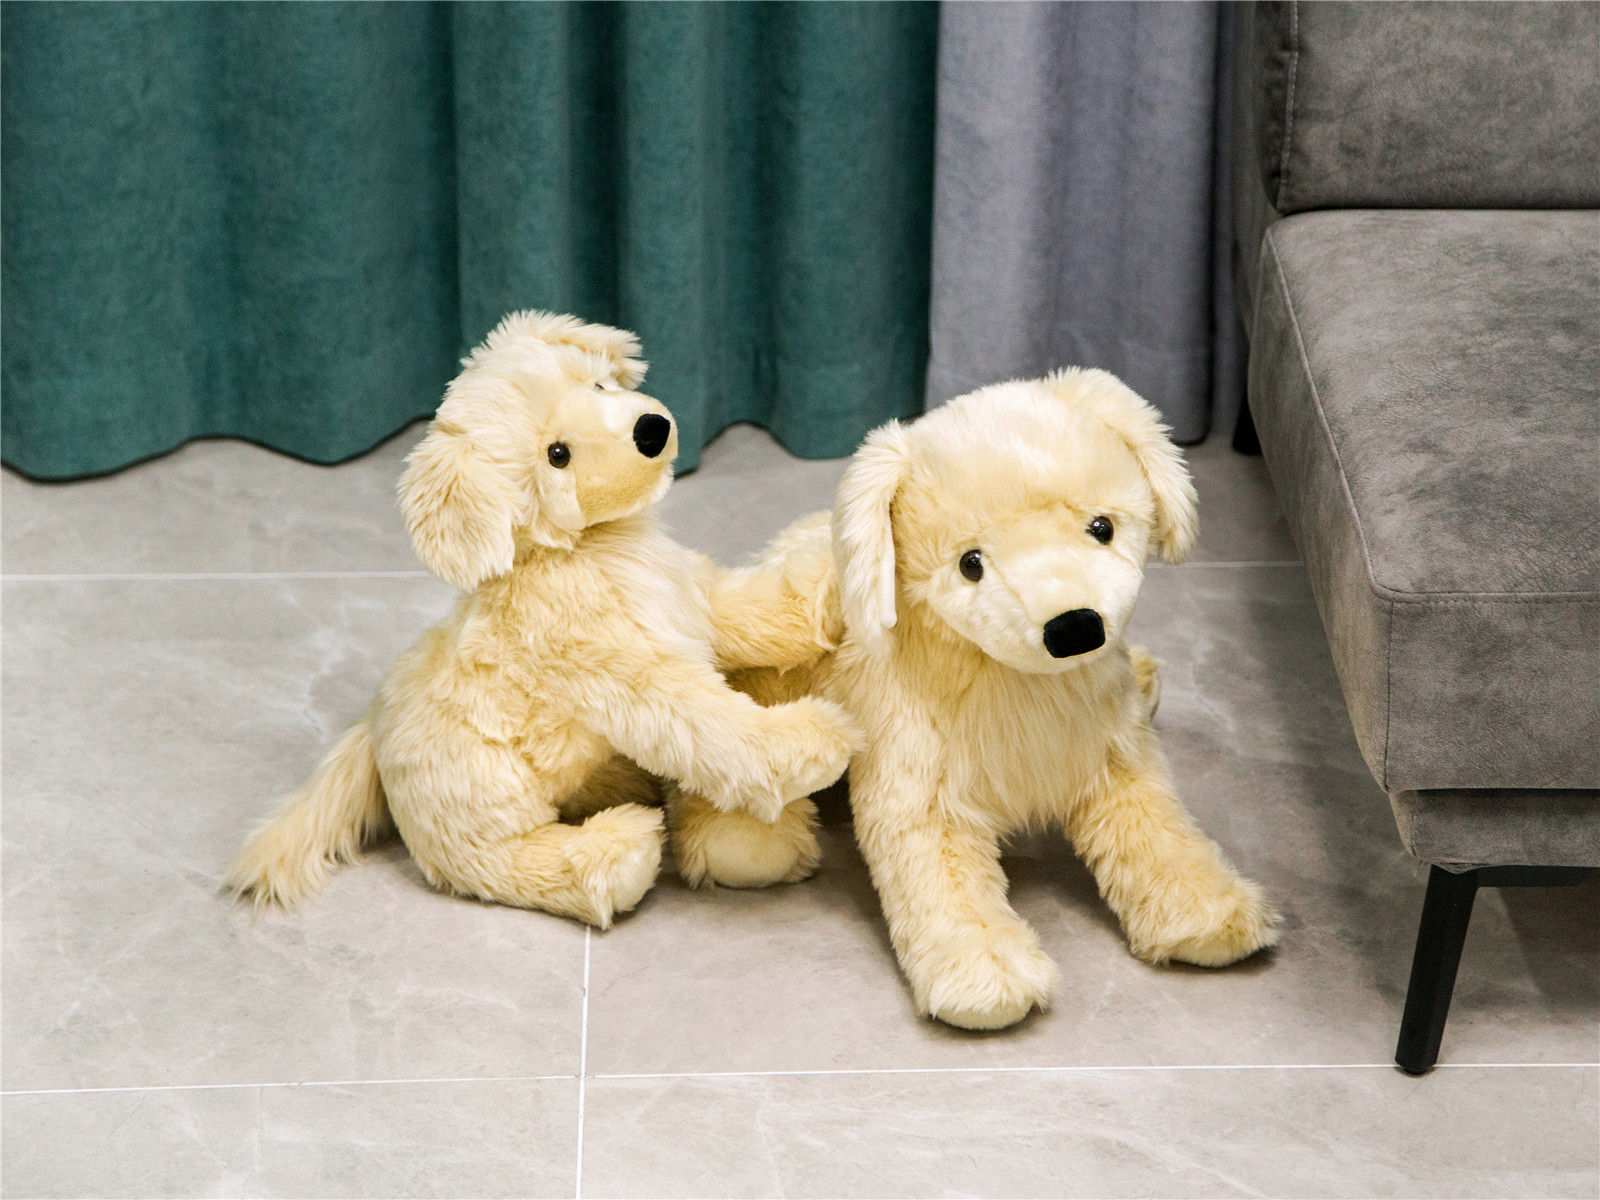 30-50CMSimulation Golden Retriever Labrado Dog Long-haired Dog Plush Toy Stuffed Animals Home Decoration Birthday Christmas Gift